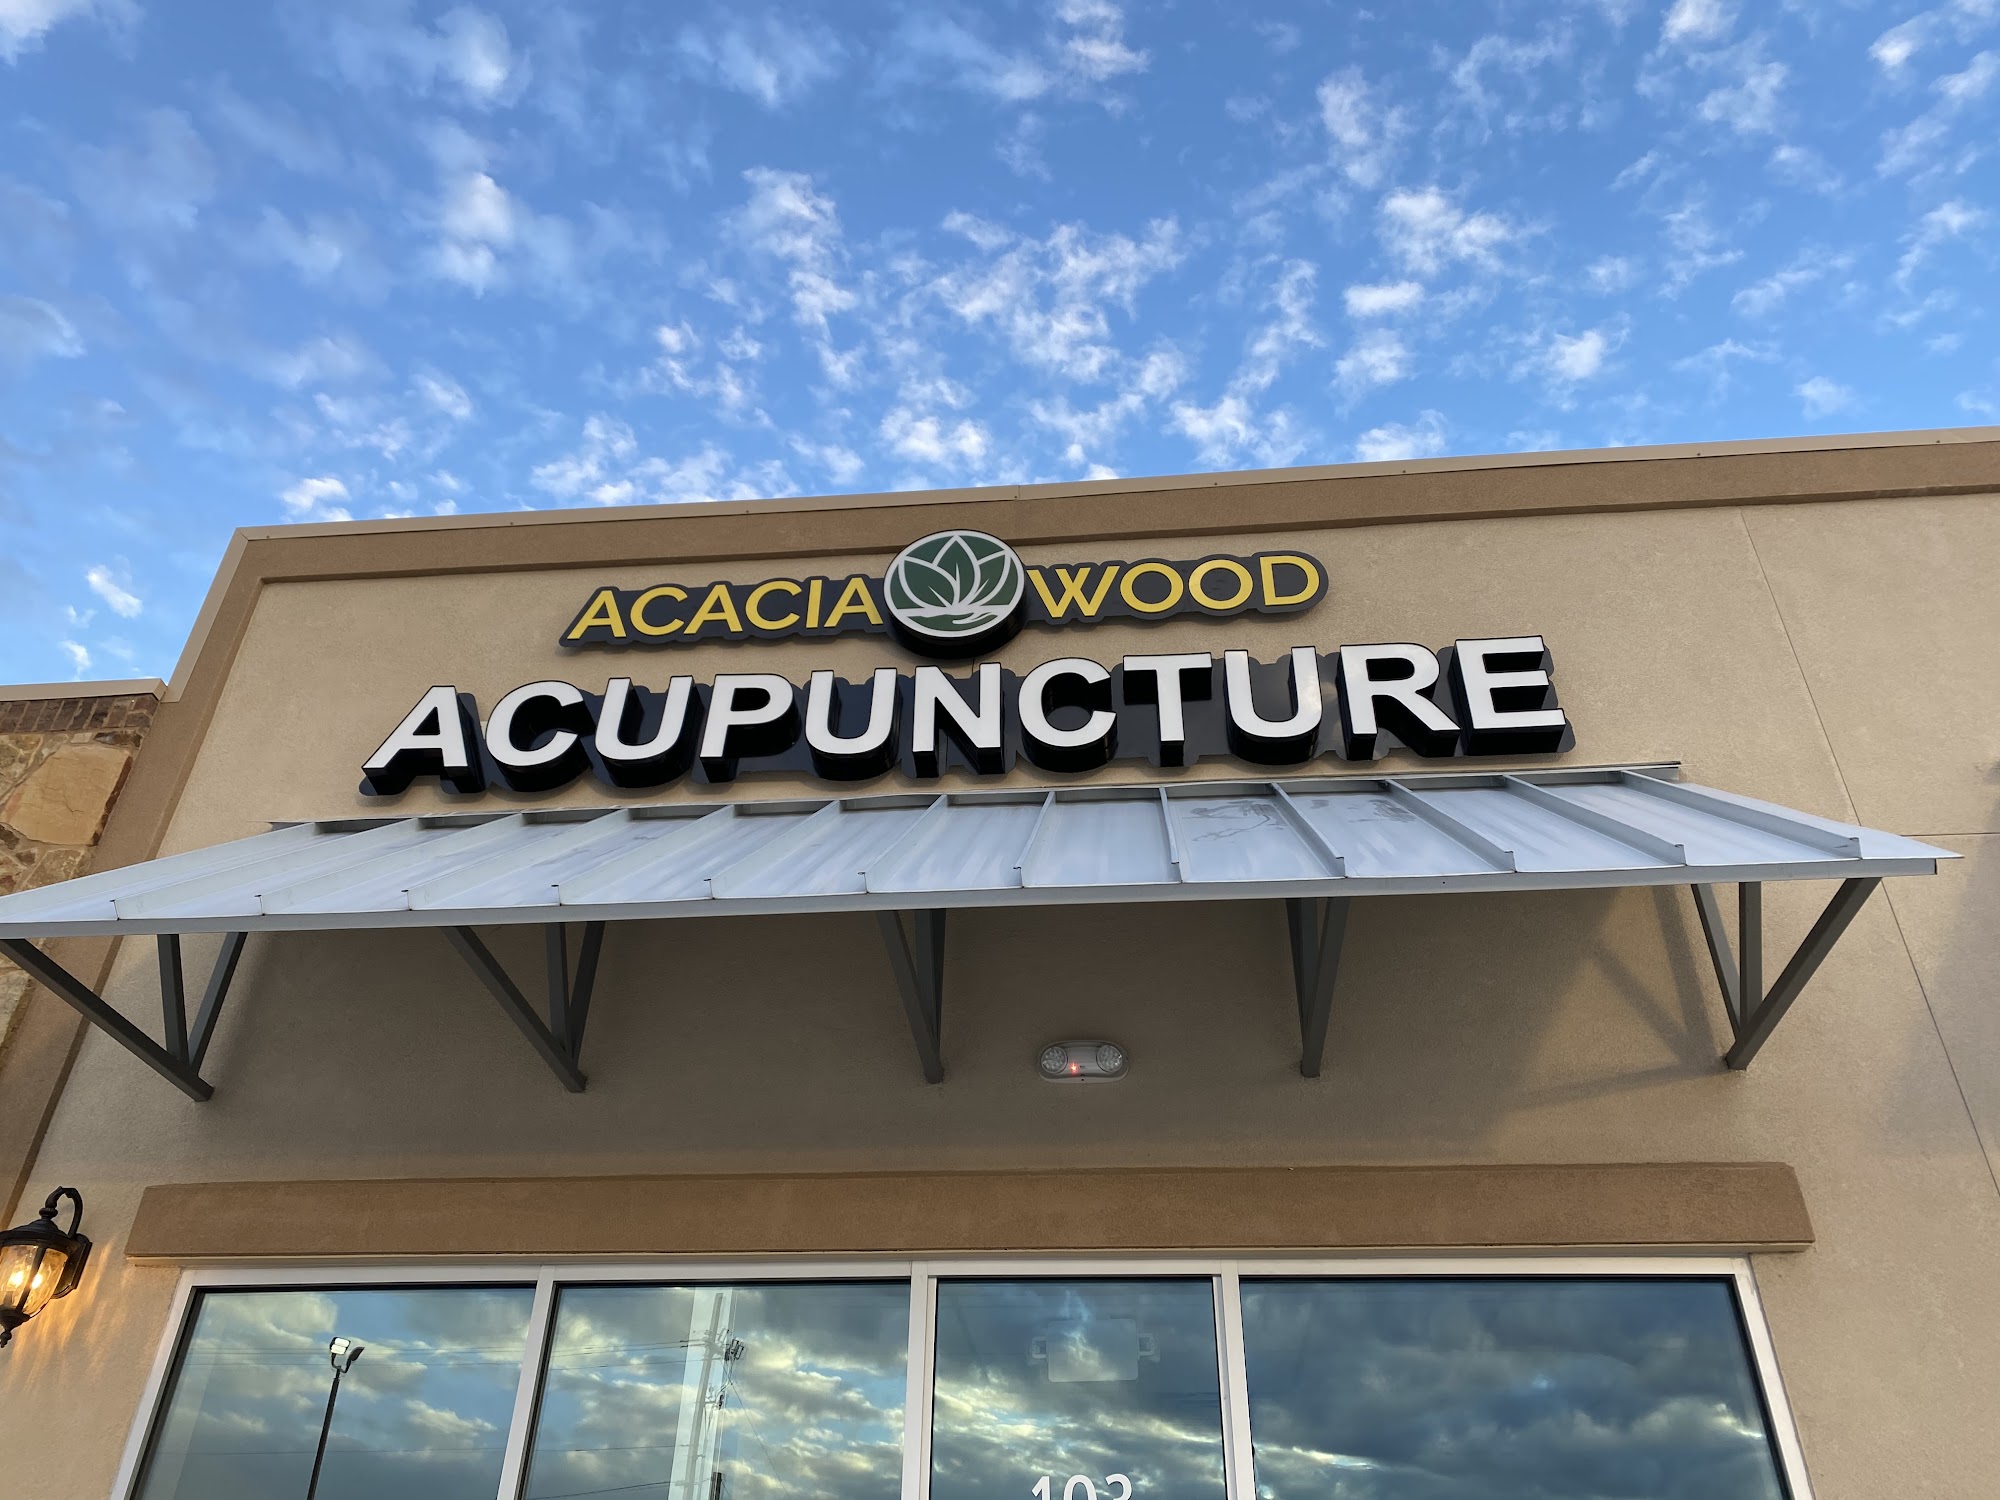 Acaciawood Acupuncture